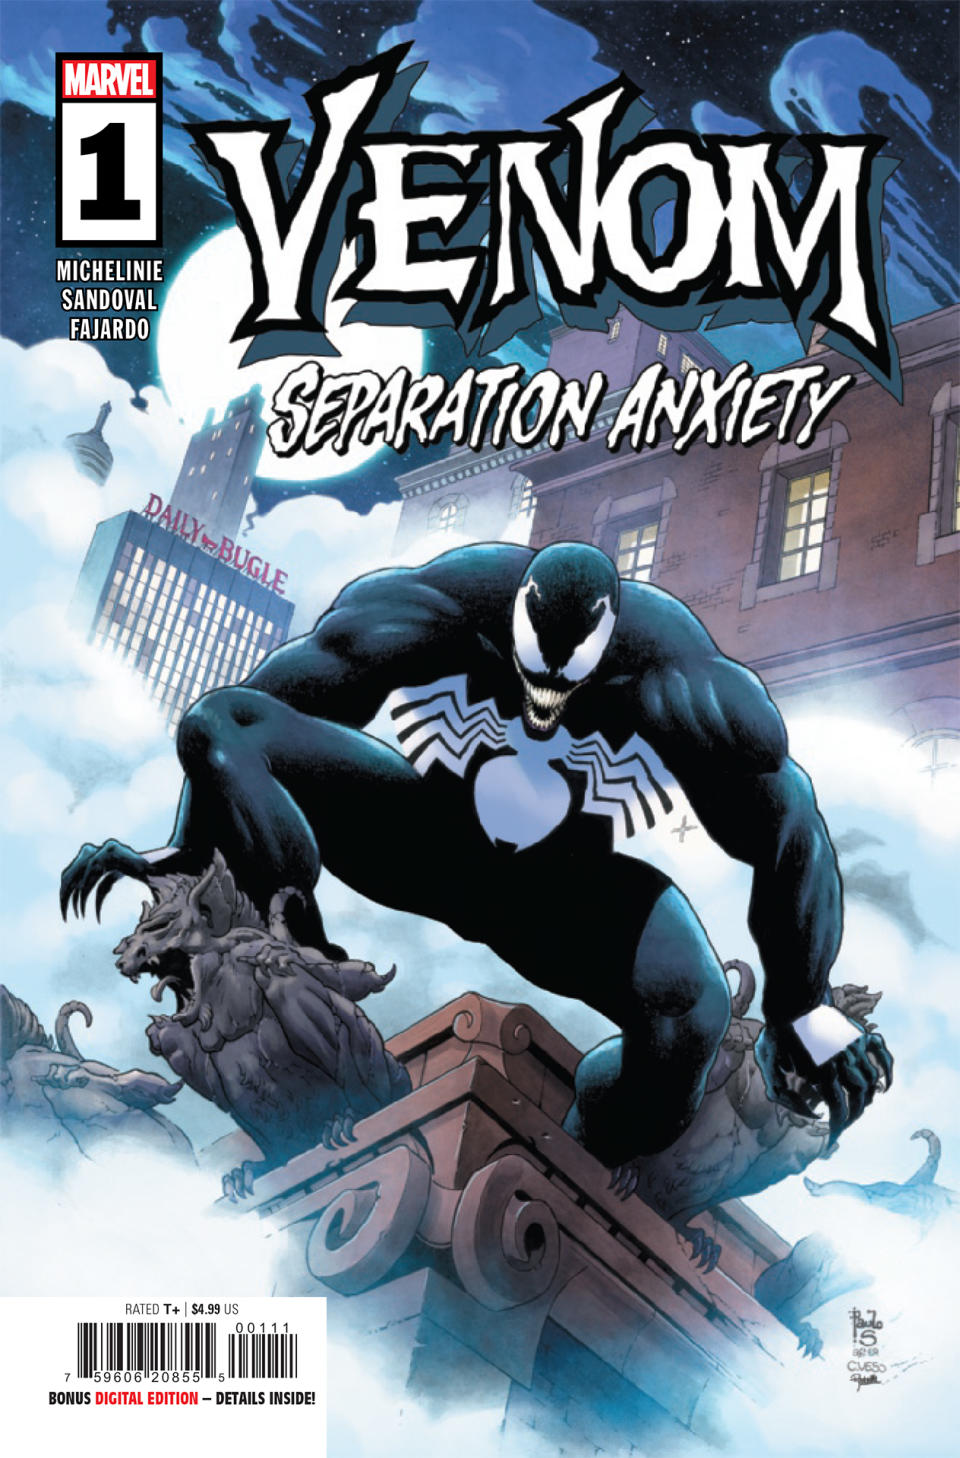 Venom: Separation Anxiety #1